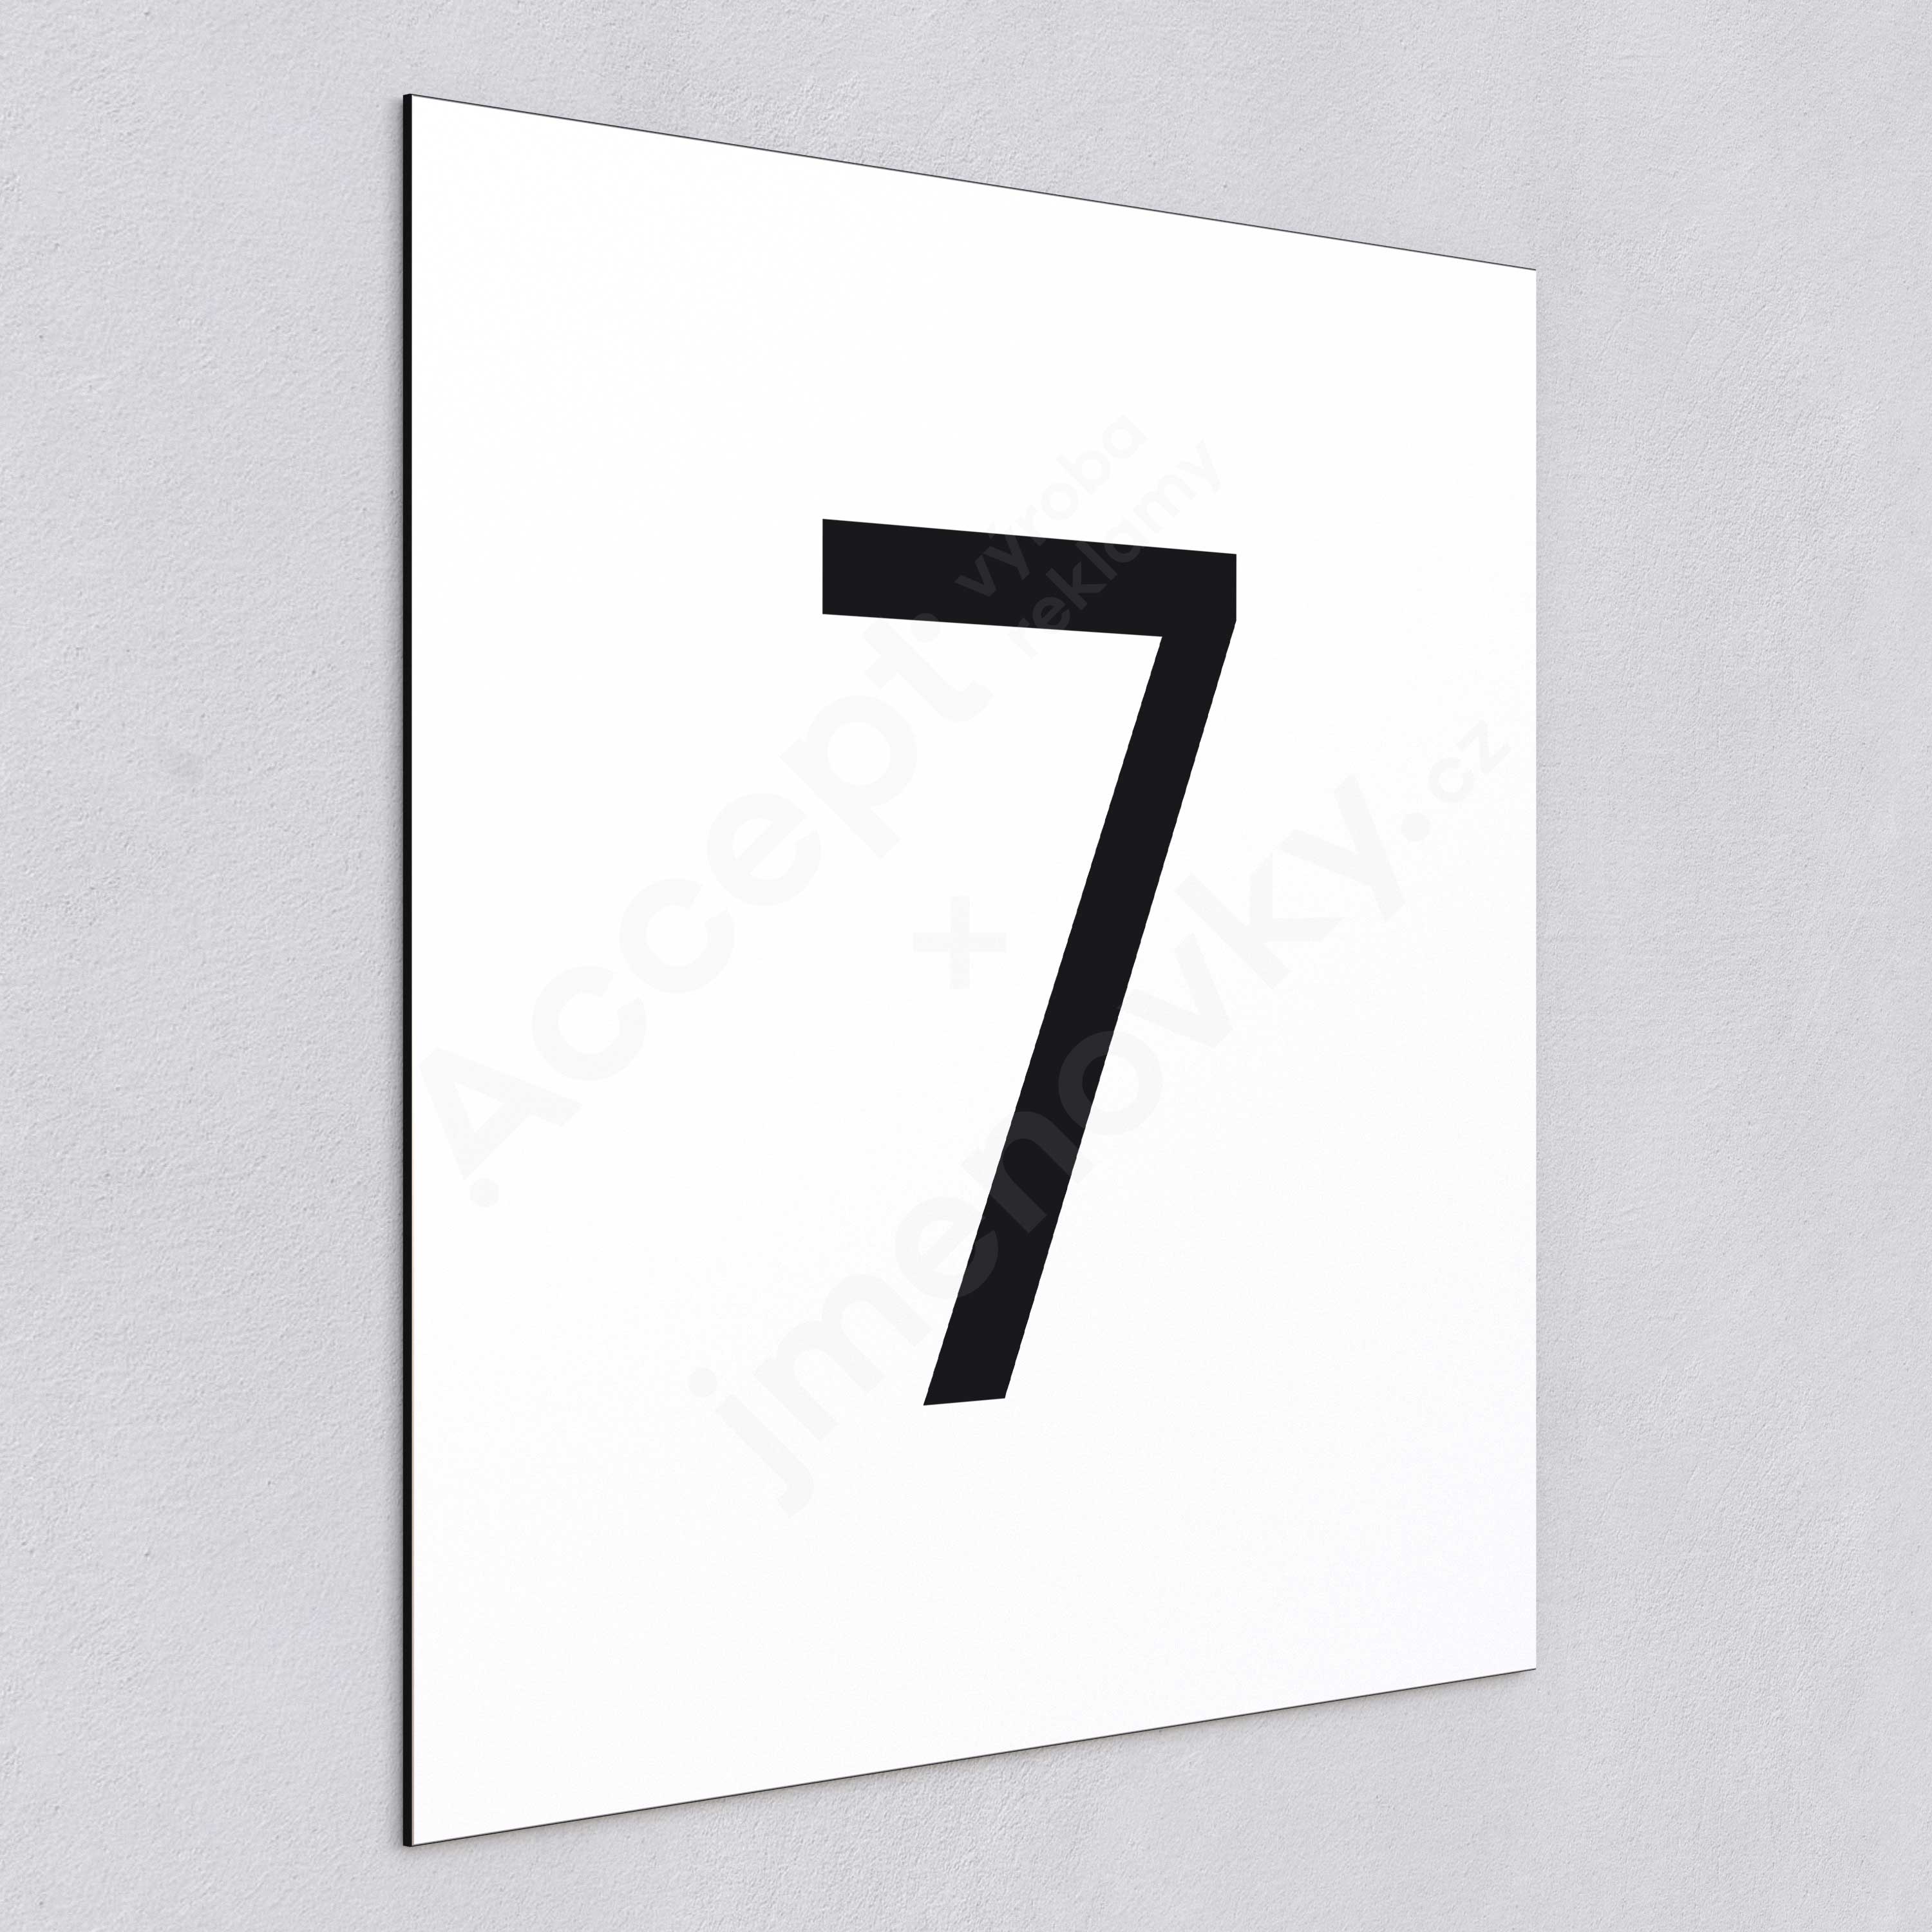 ACCEPT Označení podlaží - číslo "7" (300 x 300 mm) - bílá tabulka - černý popis